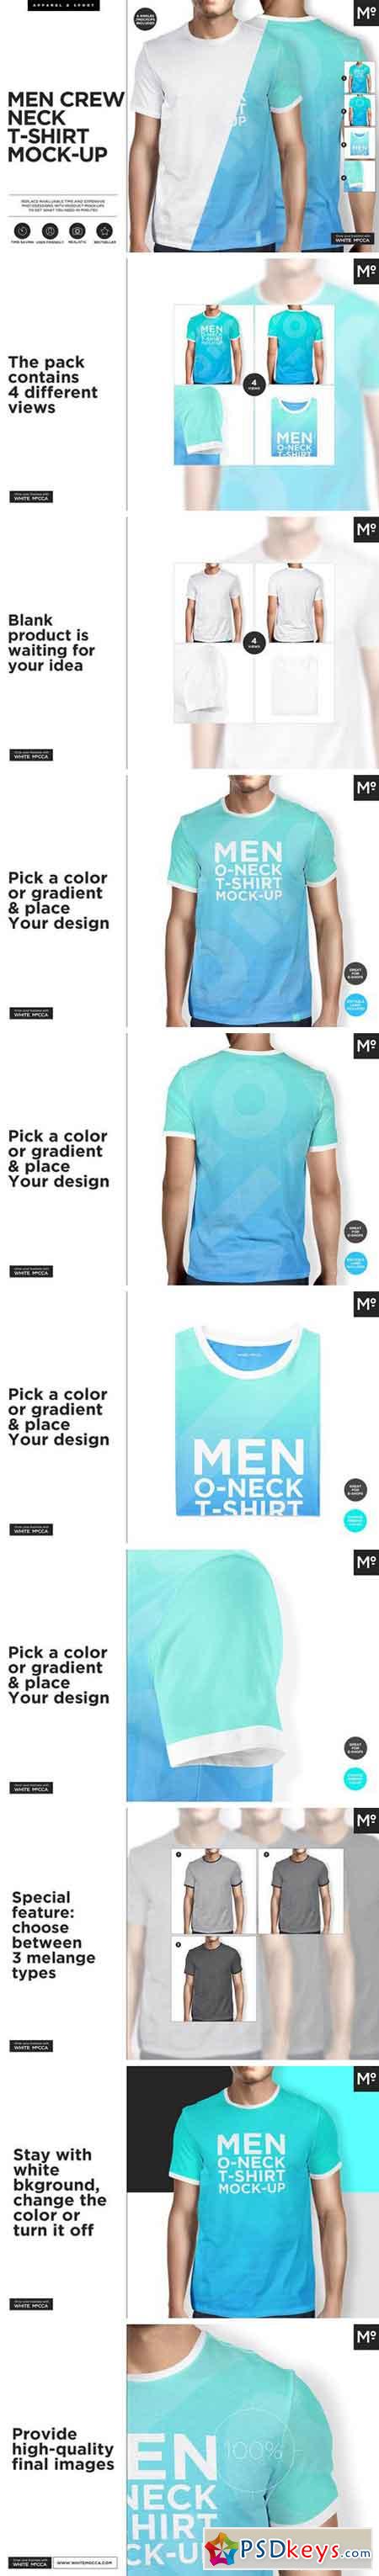 Men Crew Neck T-shirt Mock-ups Set 2277556 » Free Download Photoshop ...